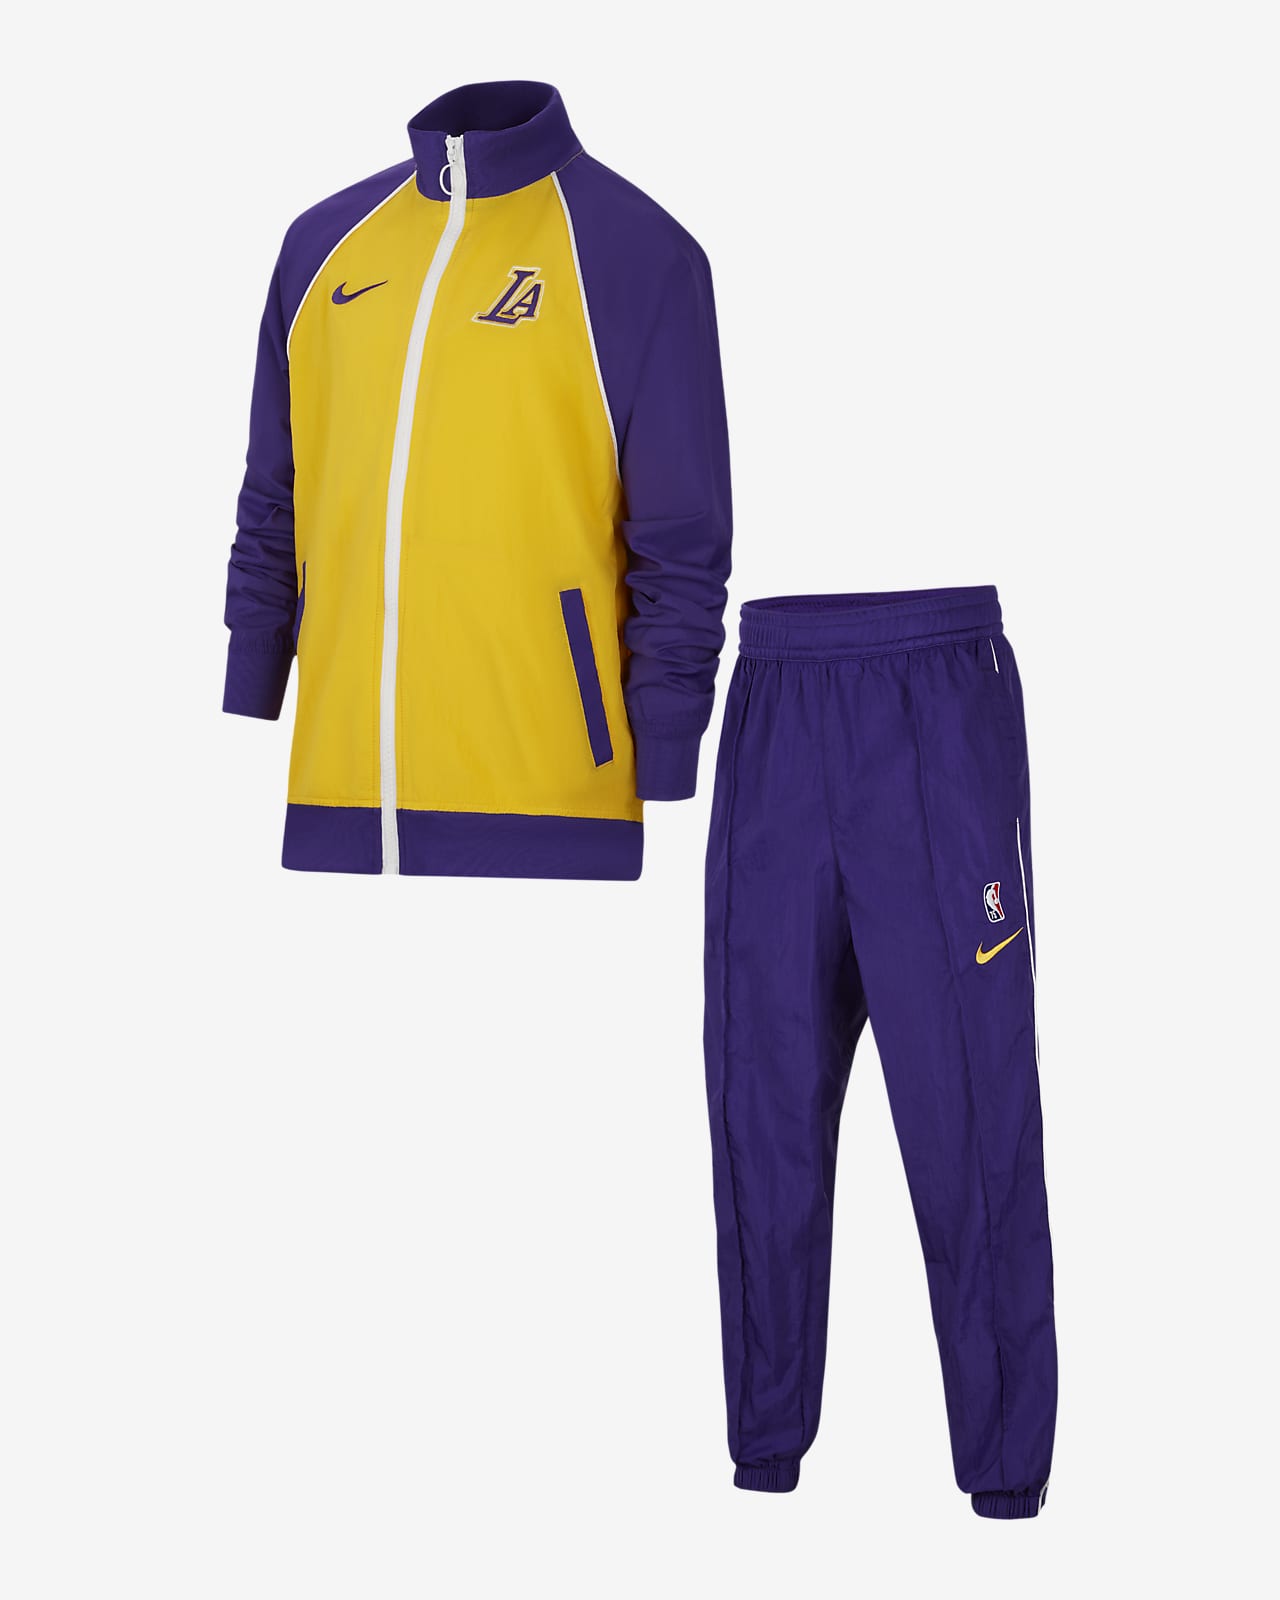 Electrizar Cuña Fragua Los Angeles Lakers Courtside Chándal Nike NBA - Niño/a. Nike ES